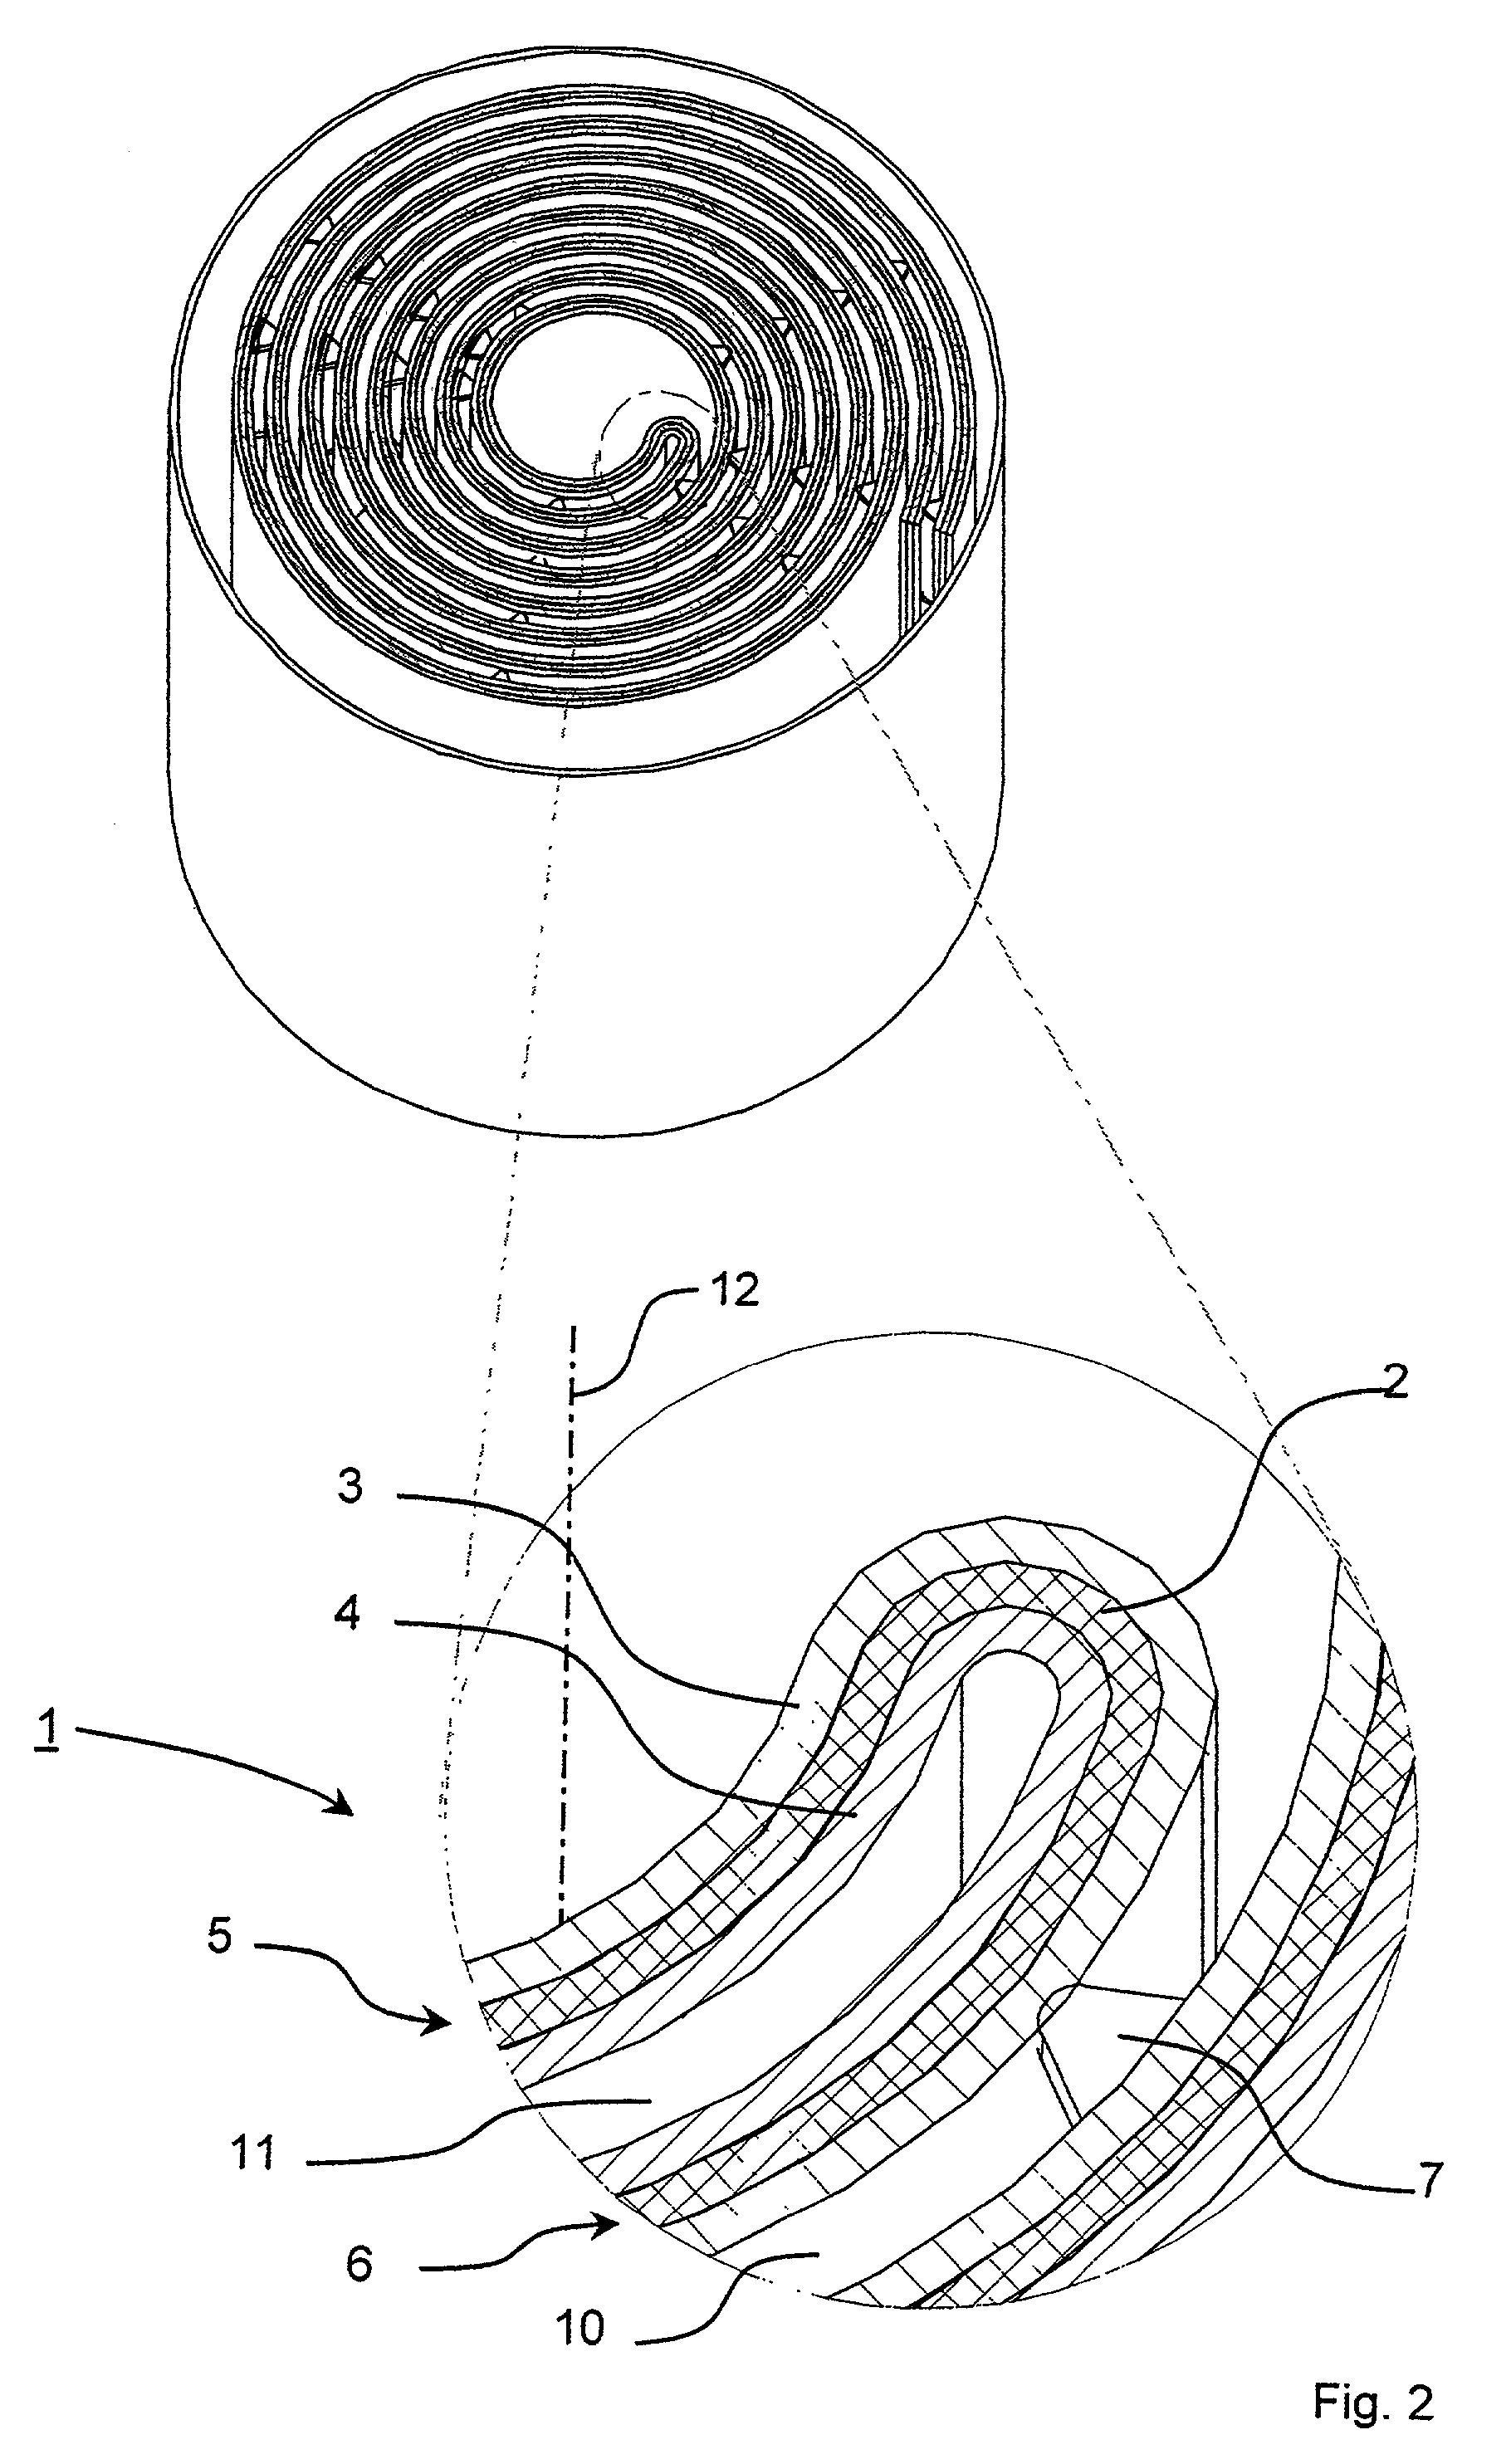 Wick arrangement for an anesthetic evaporator